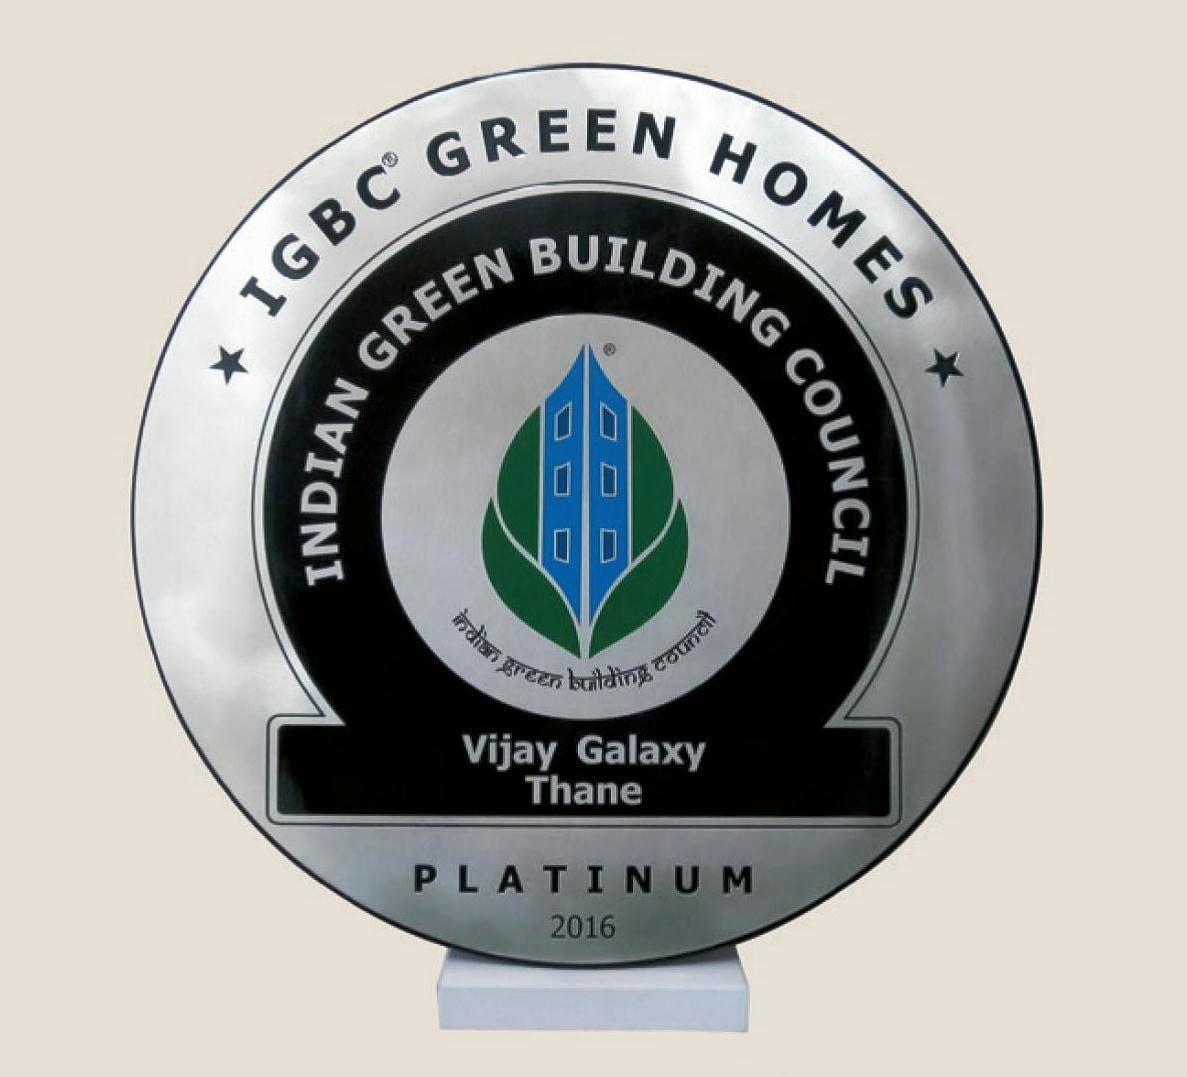 IGBC Green Homes -
Platinum By CII & IGBC 2016